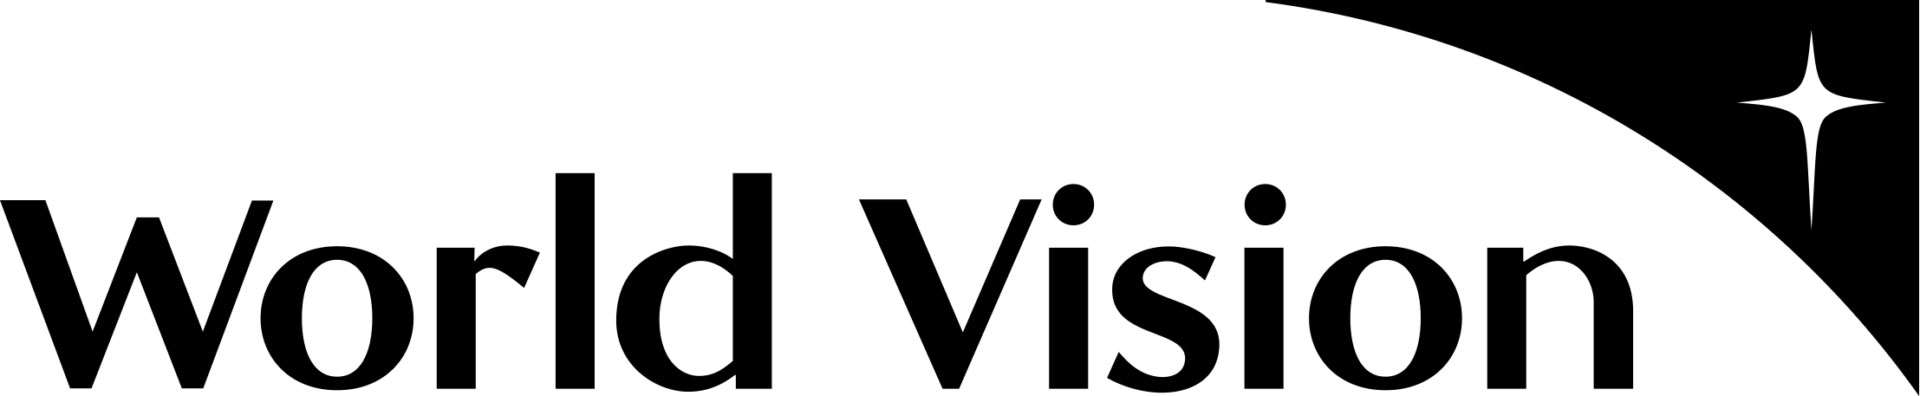 World vision logo